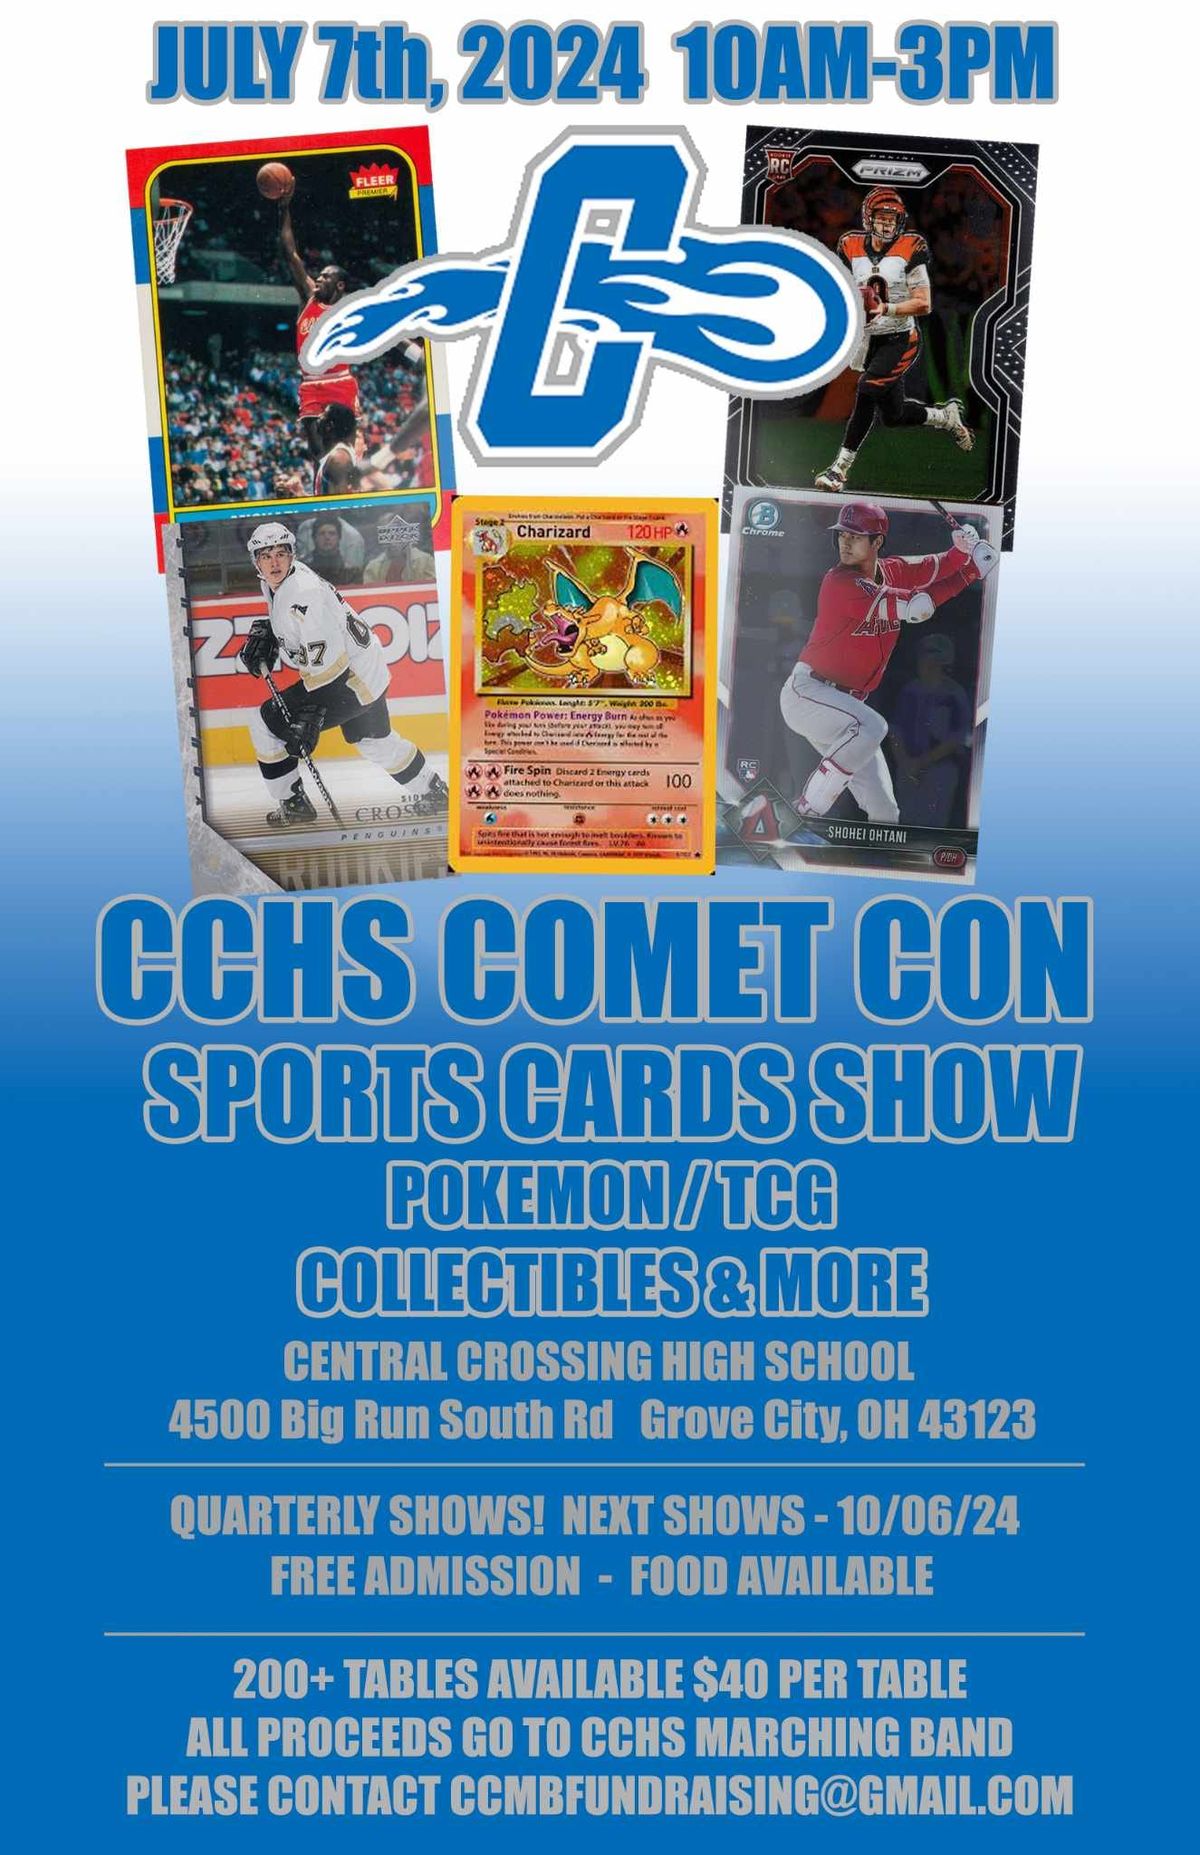 Comet Con Sports Card Show